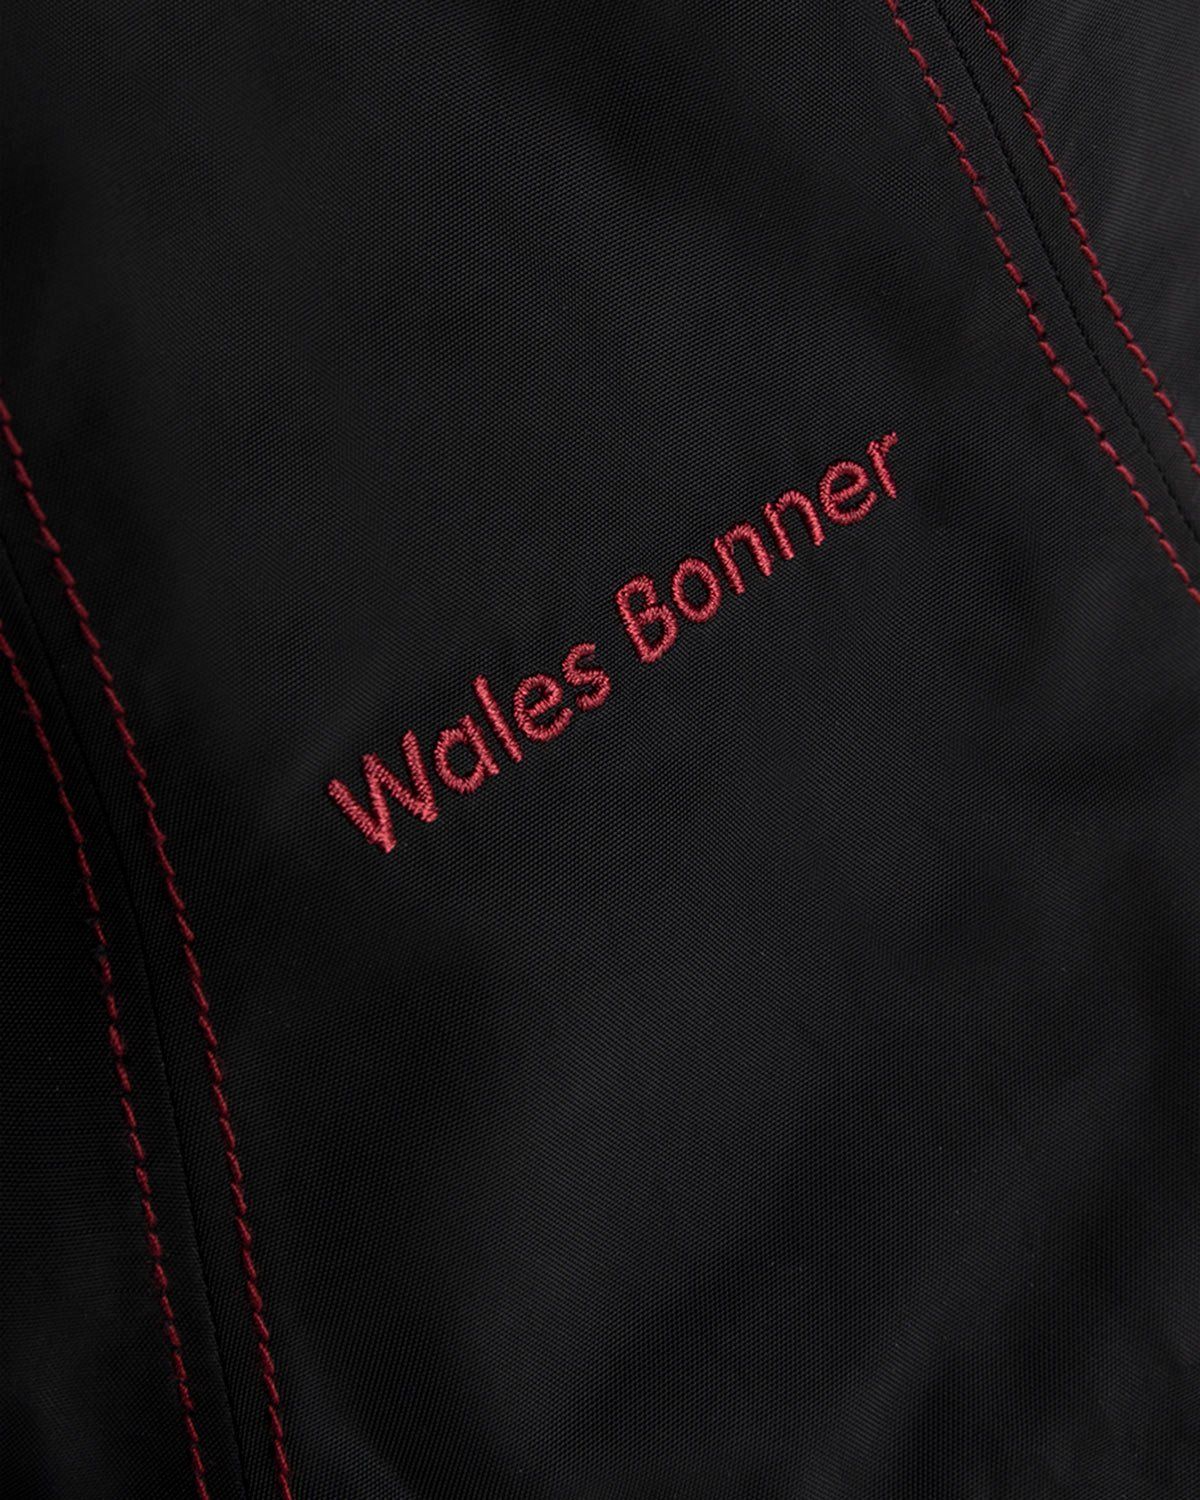 Adidas x Wales Bonner – Sunhat Black Burgundy - Image 3